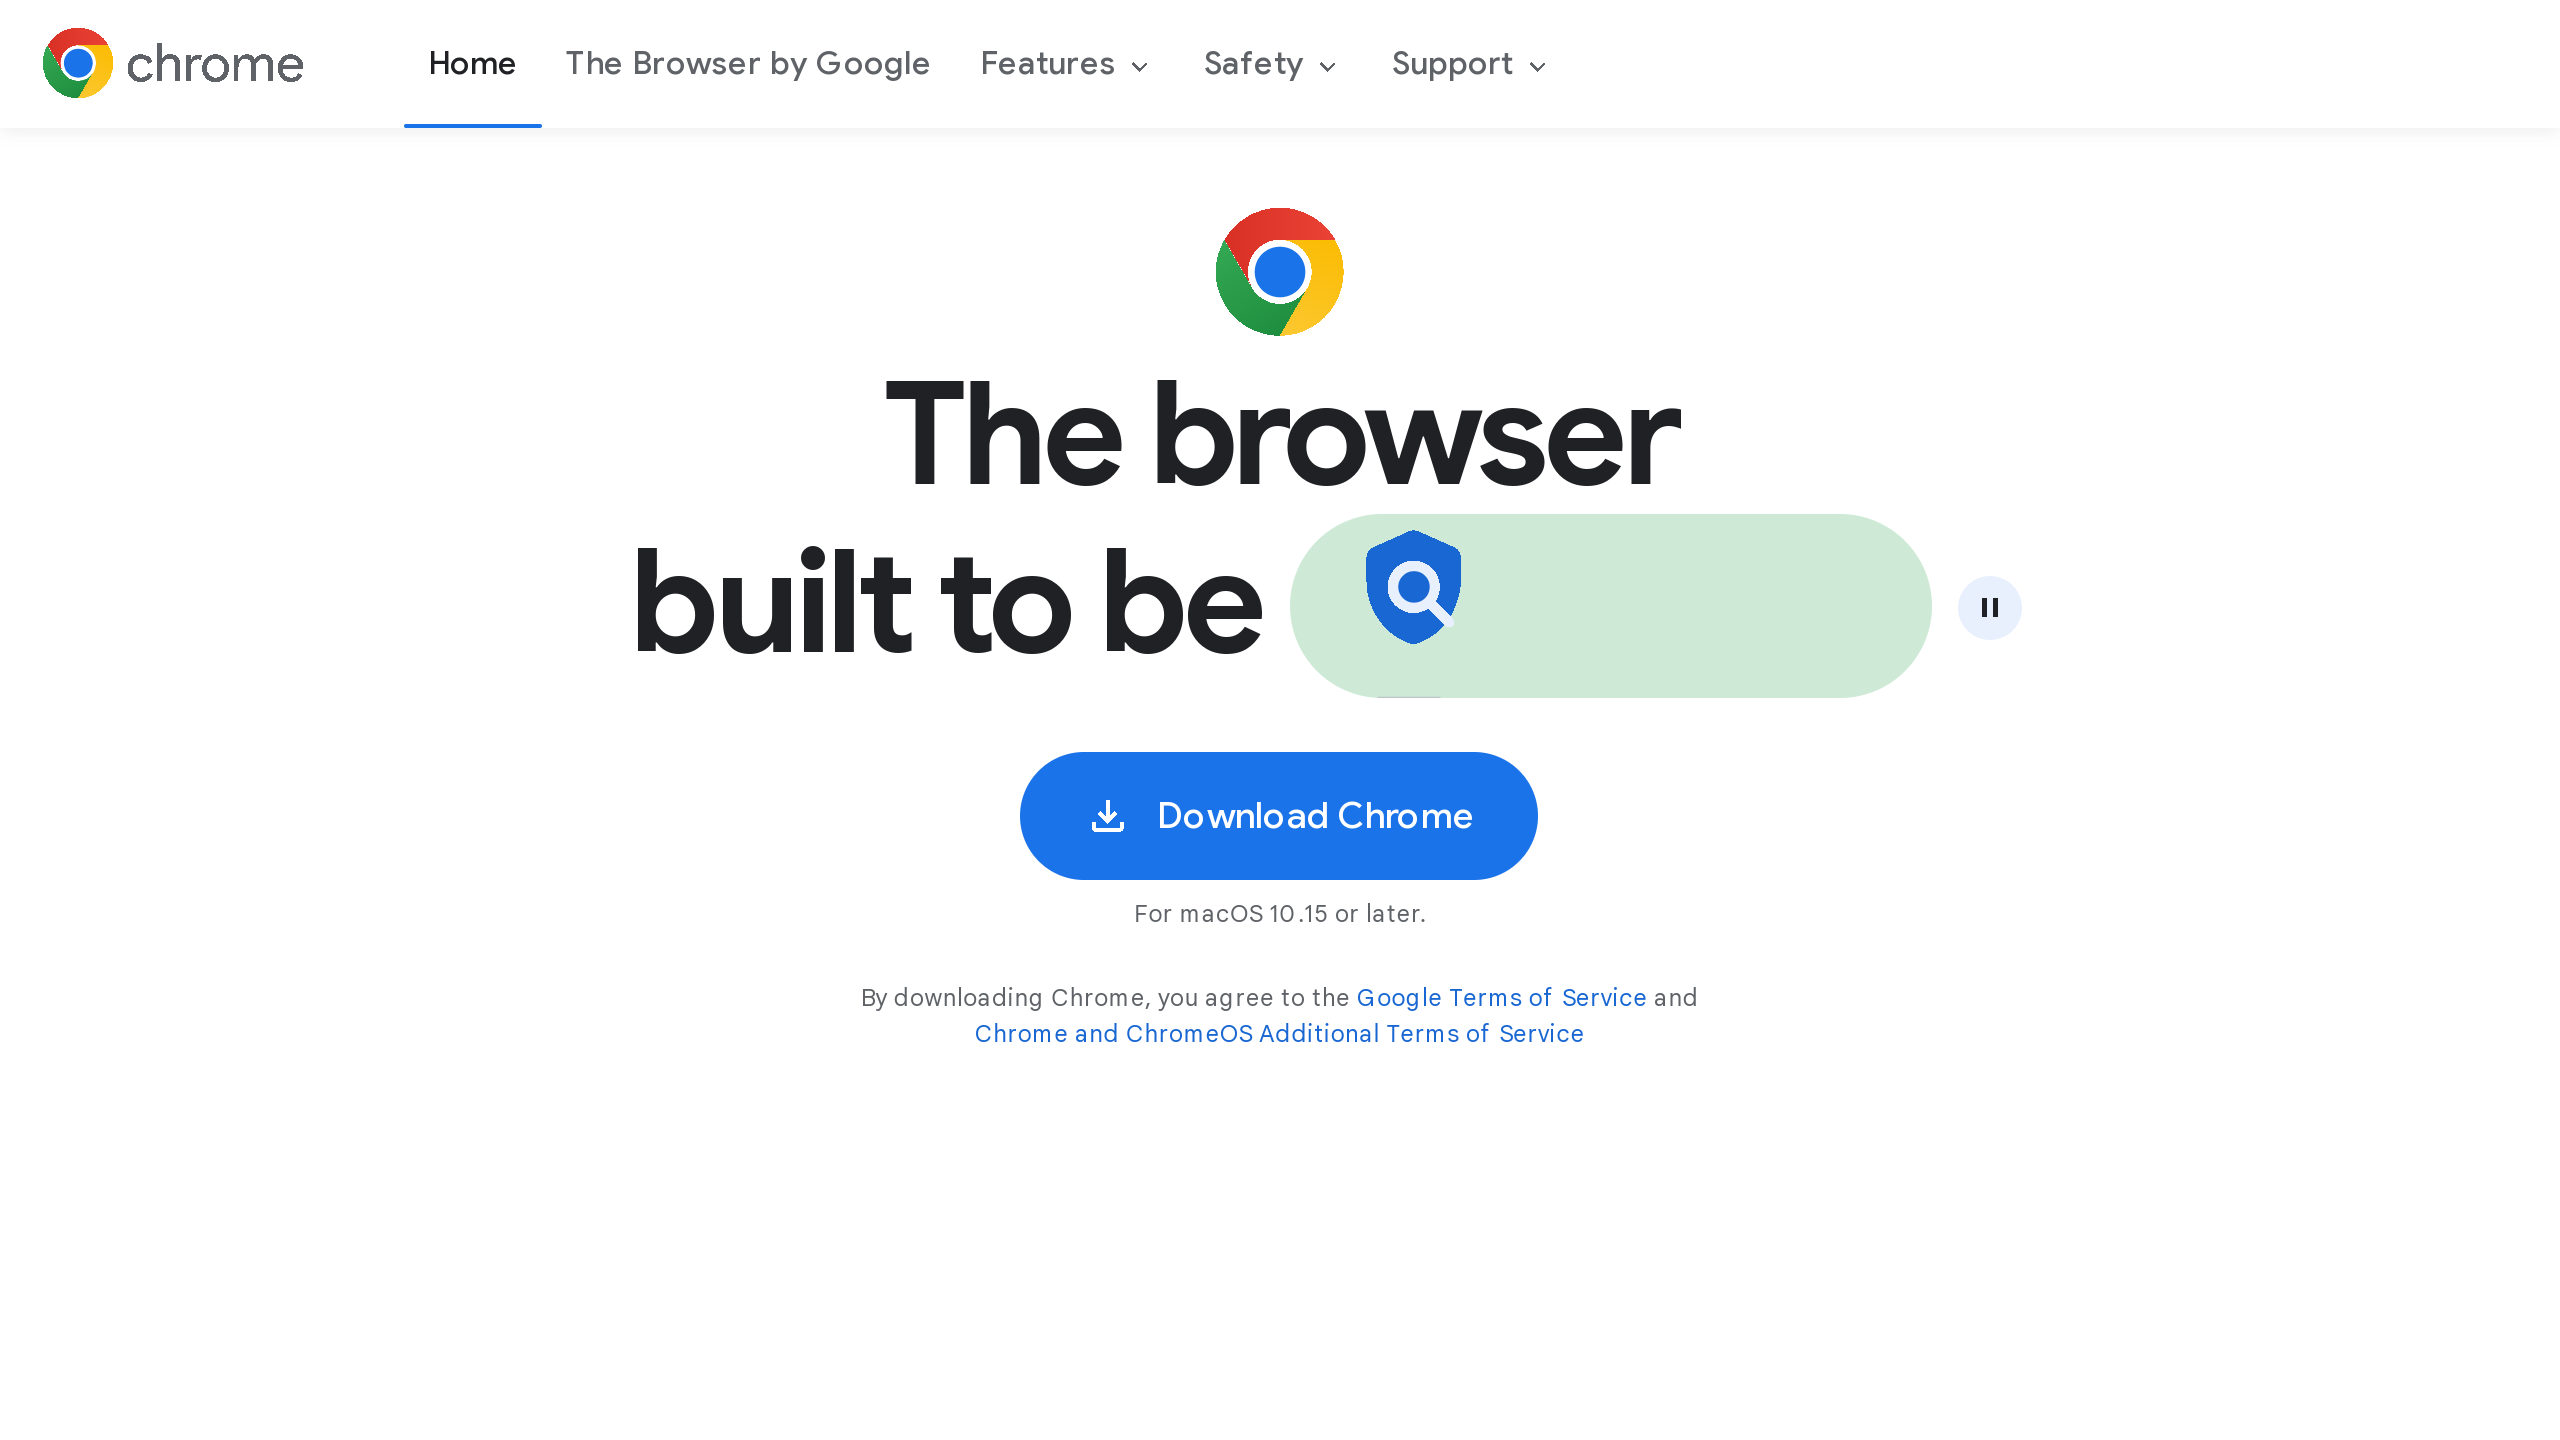 Chrome's website screenshot